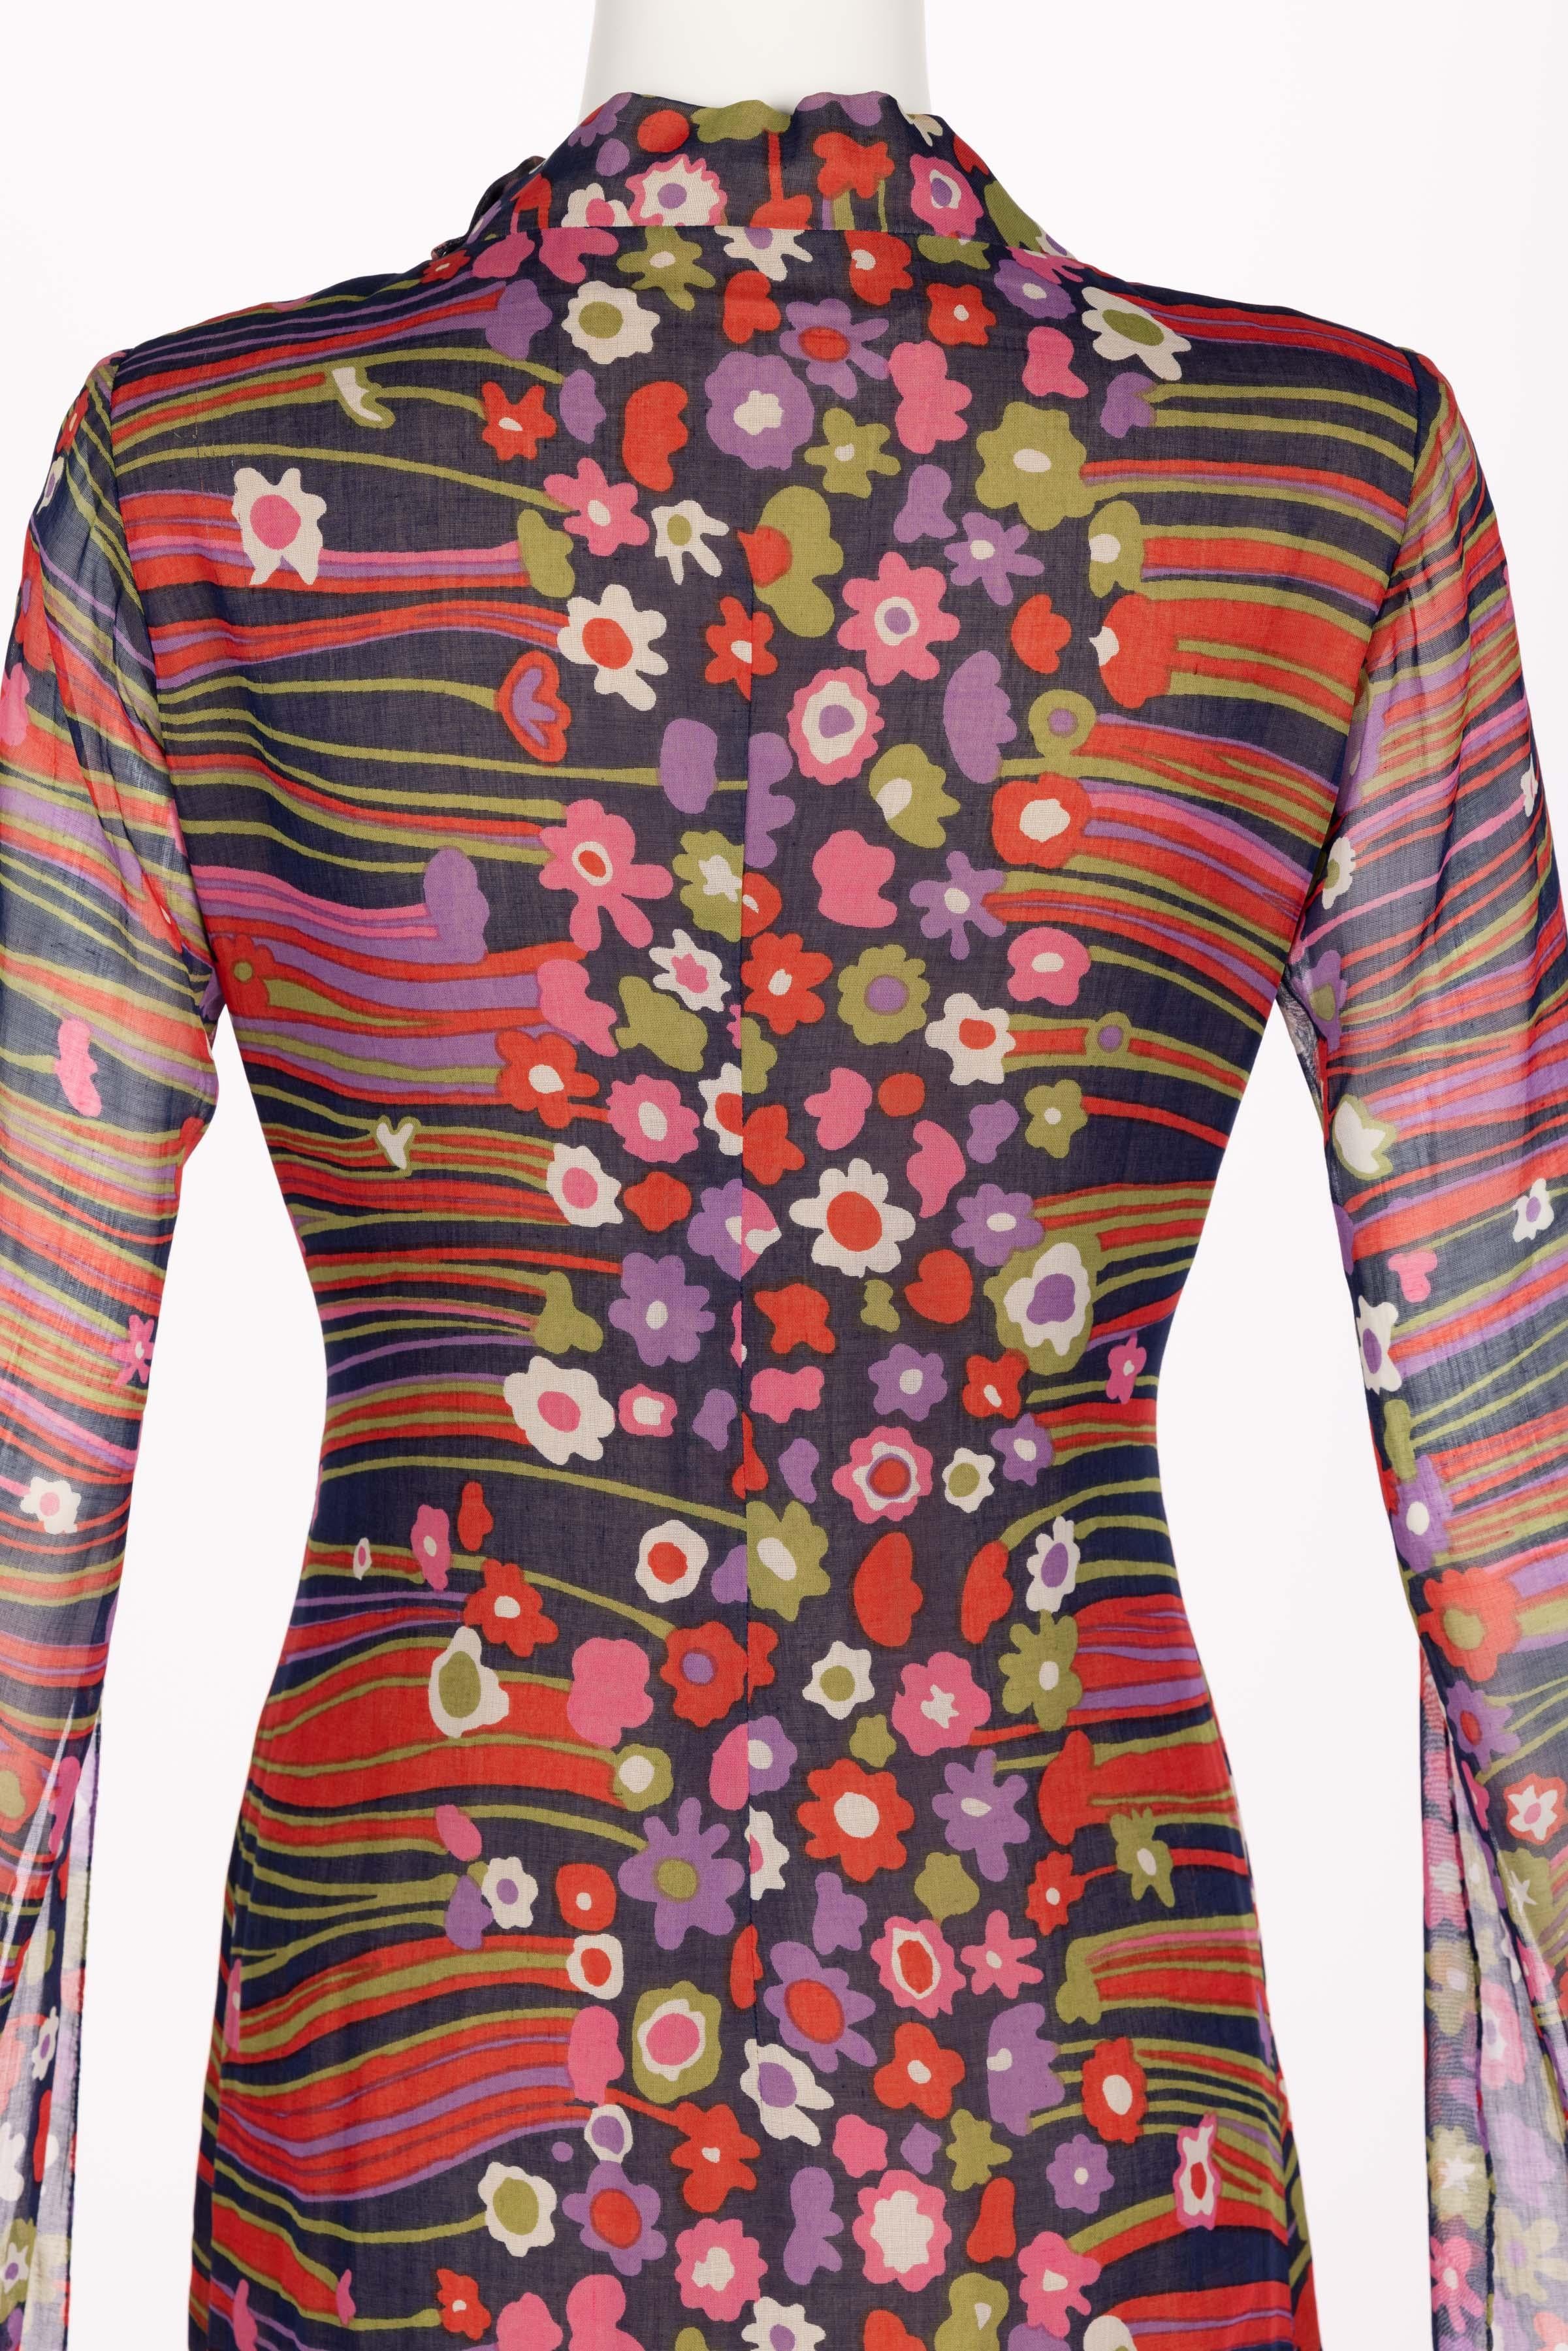 Pauline Trigère Abstract Floral Print Cotton Kimono Angel-Sleeve Dress, 1960s For Sale 4